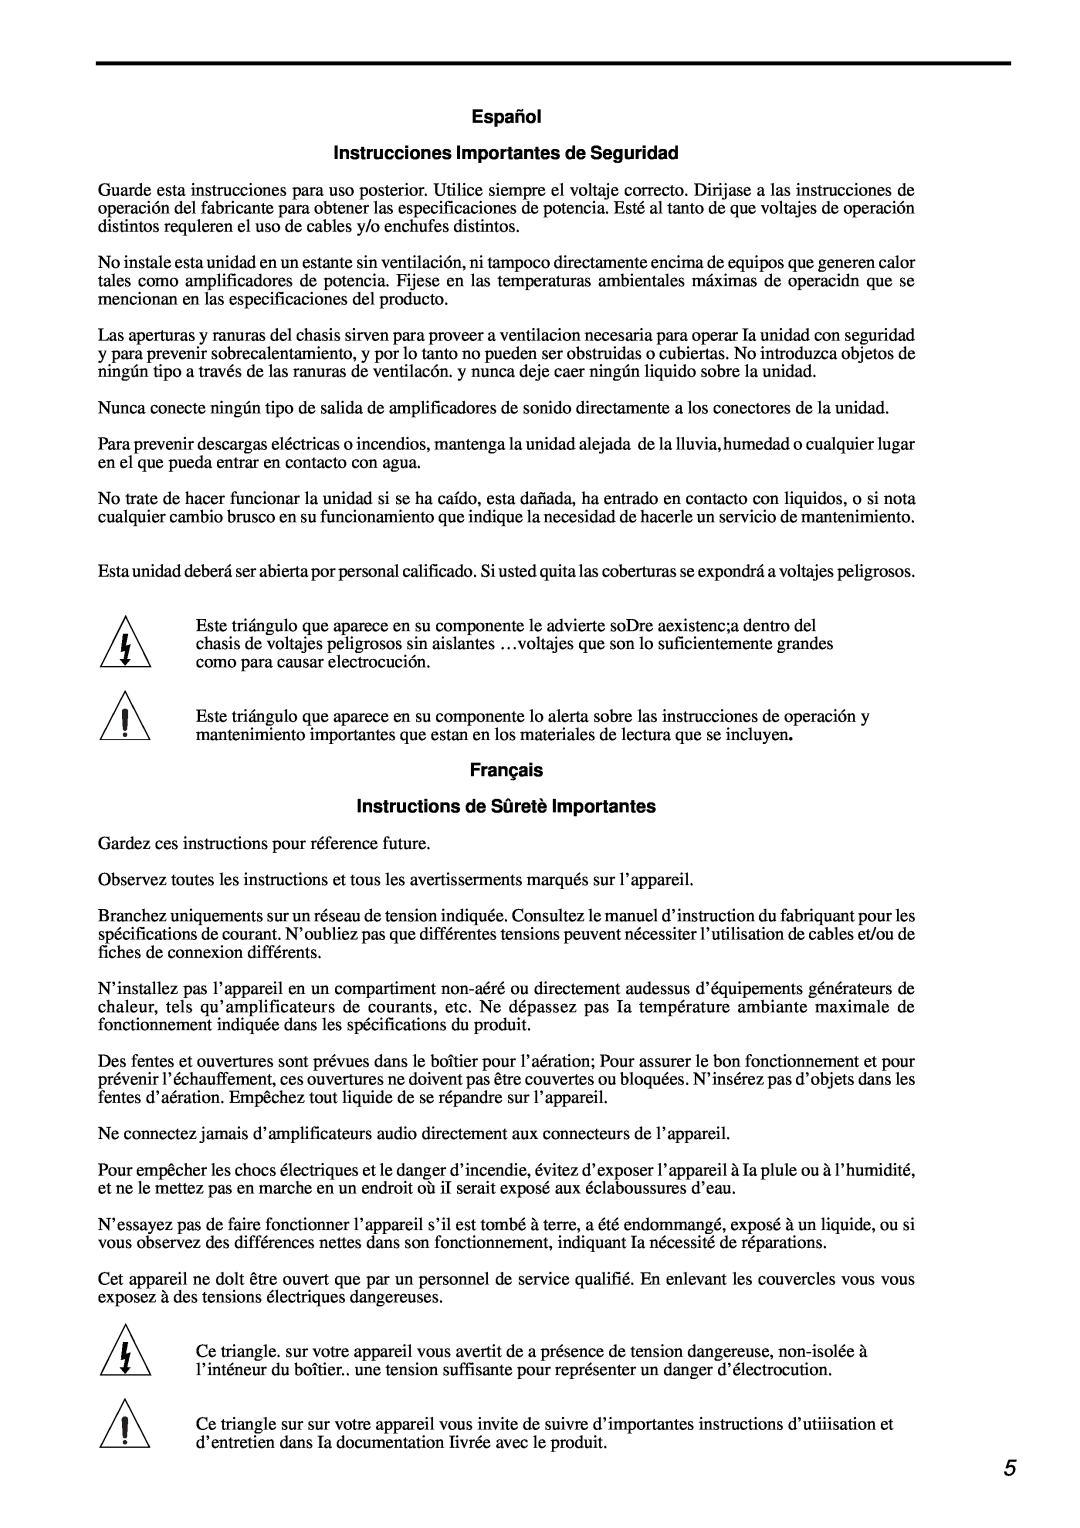 Parasound AVC-2500 owner manual Español Instrucciones Importantes de Seguridad, Français Instructions de Sûretè Importantes 